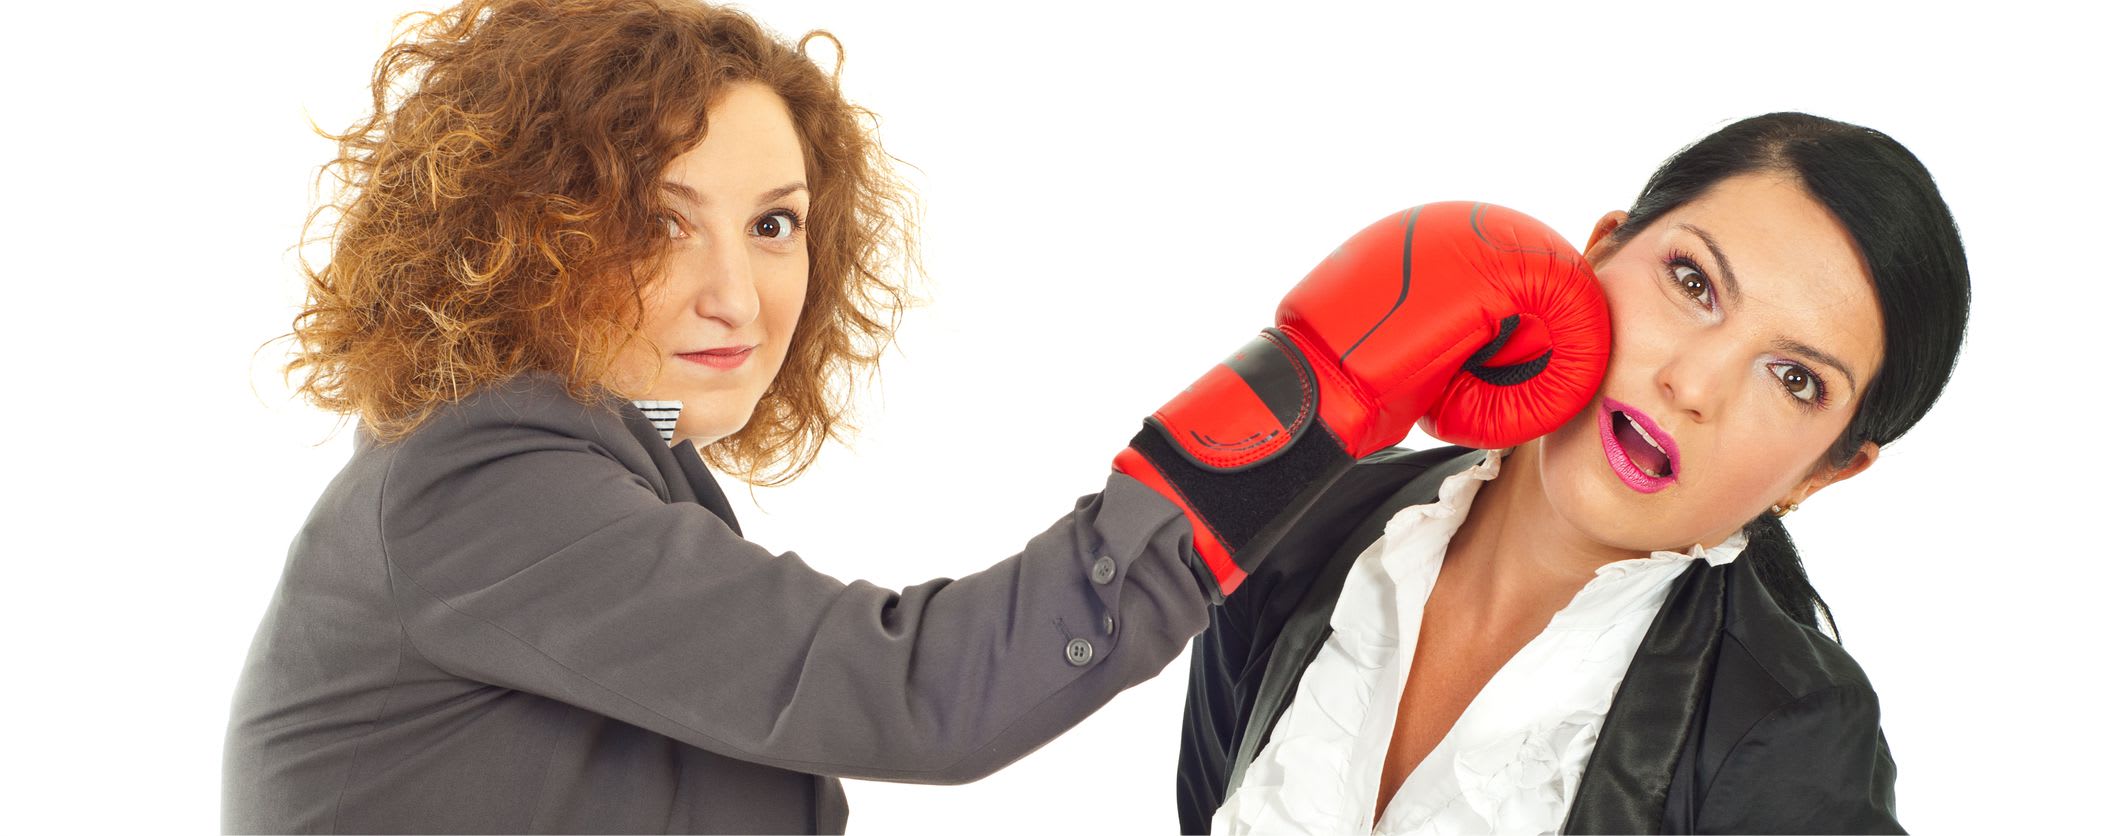 women fighting - seller vs buyer